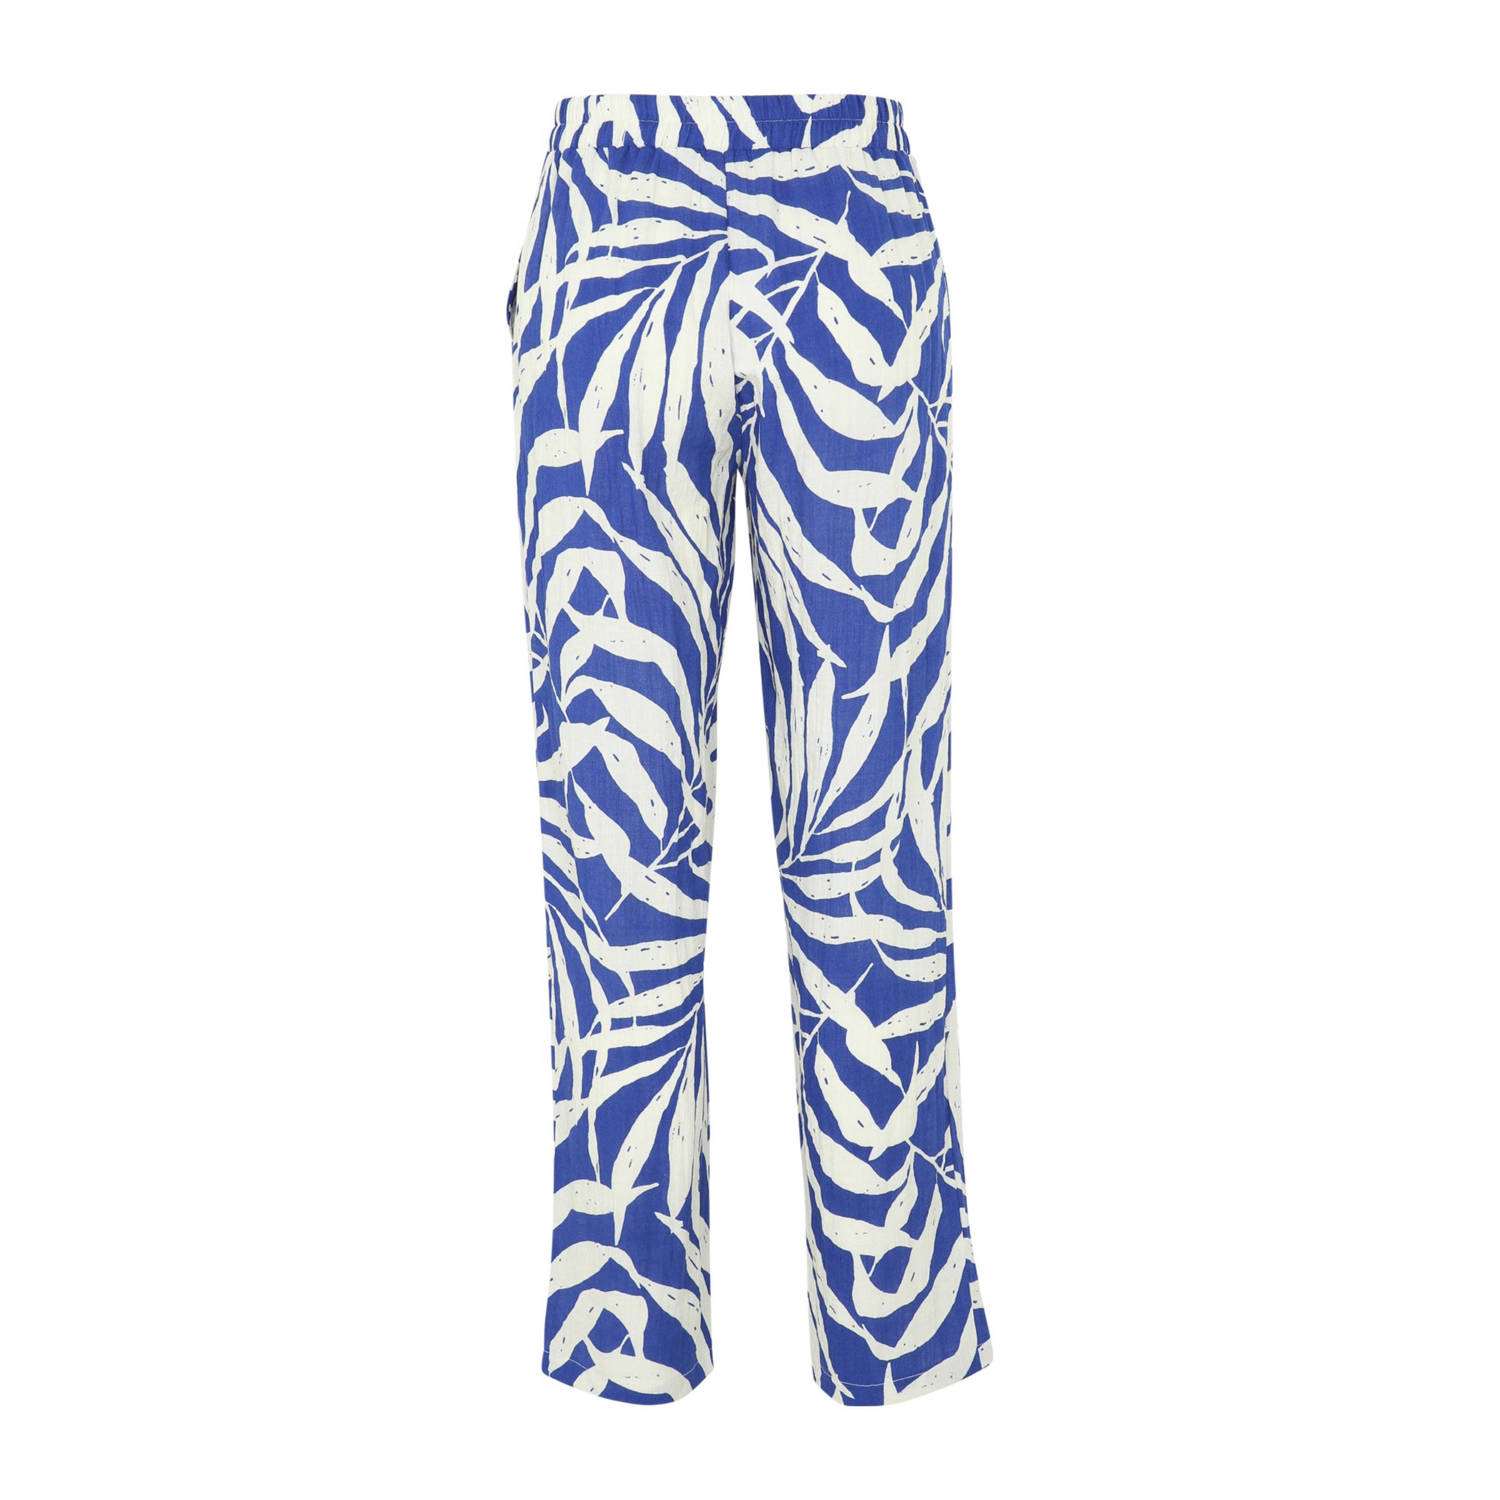 Cassis straight fit broek met bladprint blauw wit